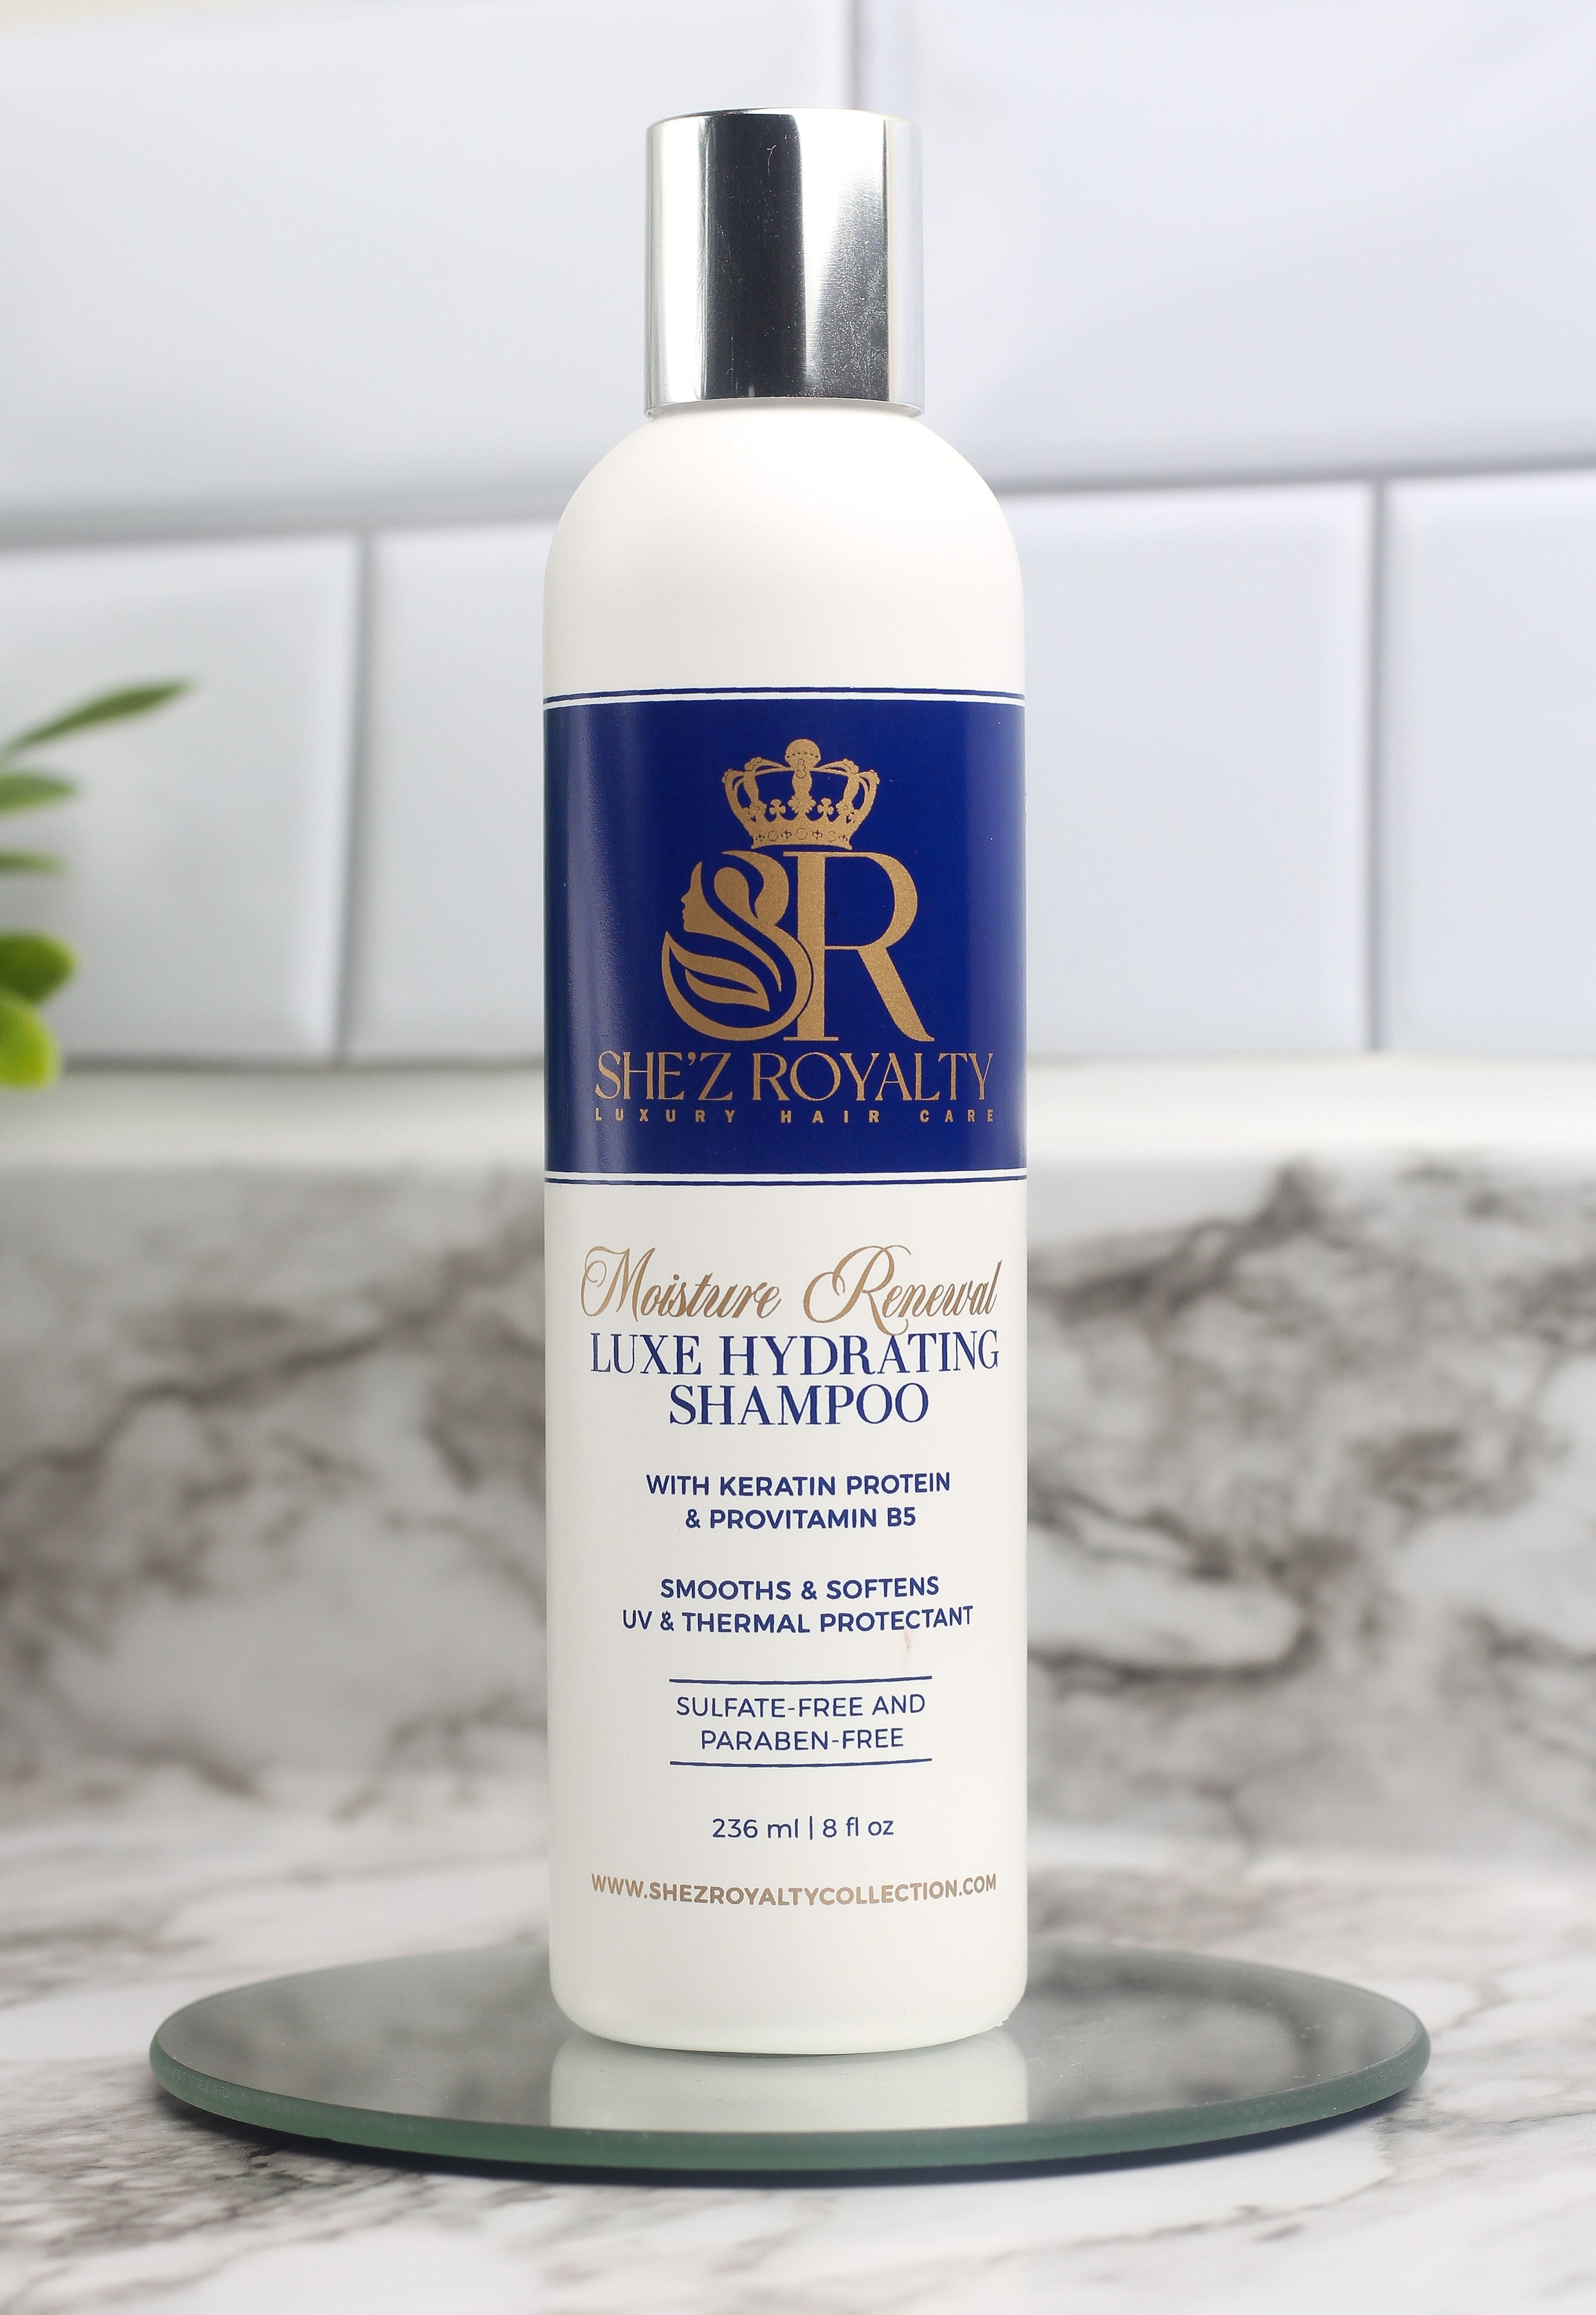 Moisture Renewal Luxe Hydrating Shampoo